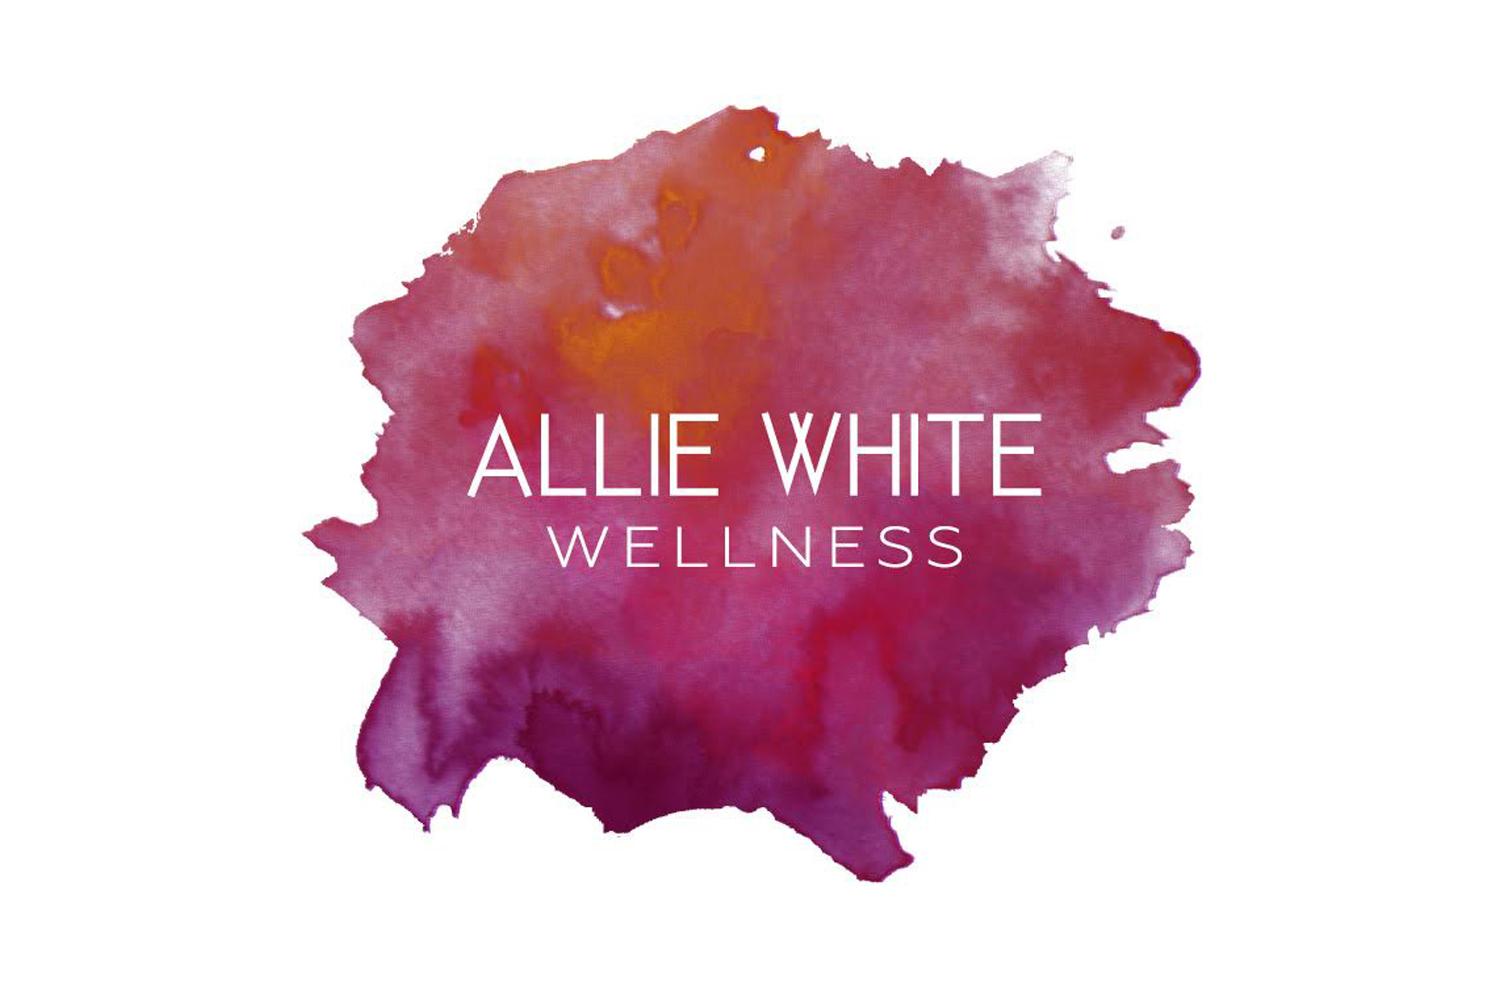 Allie White Wellness